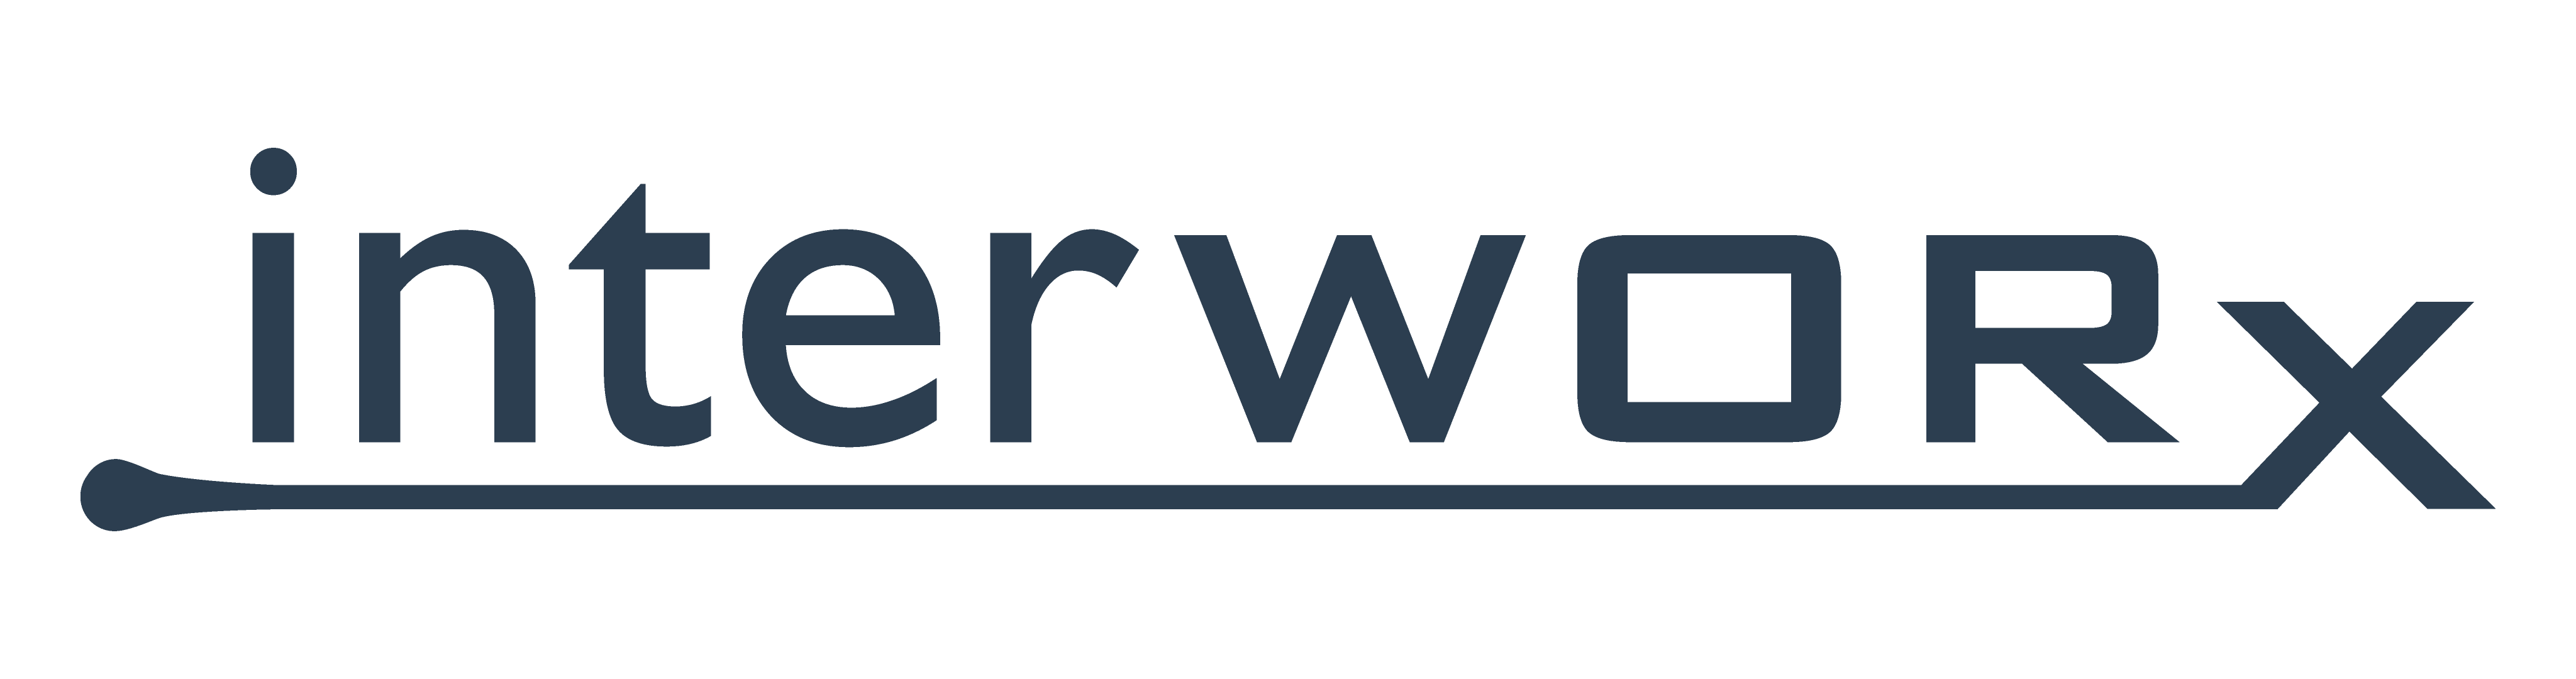 interworx-logo